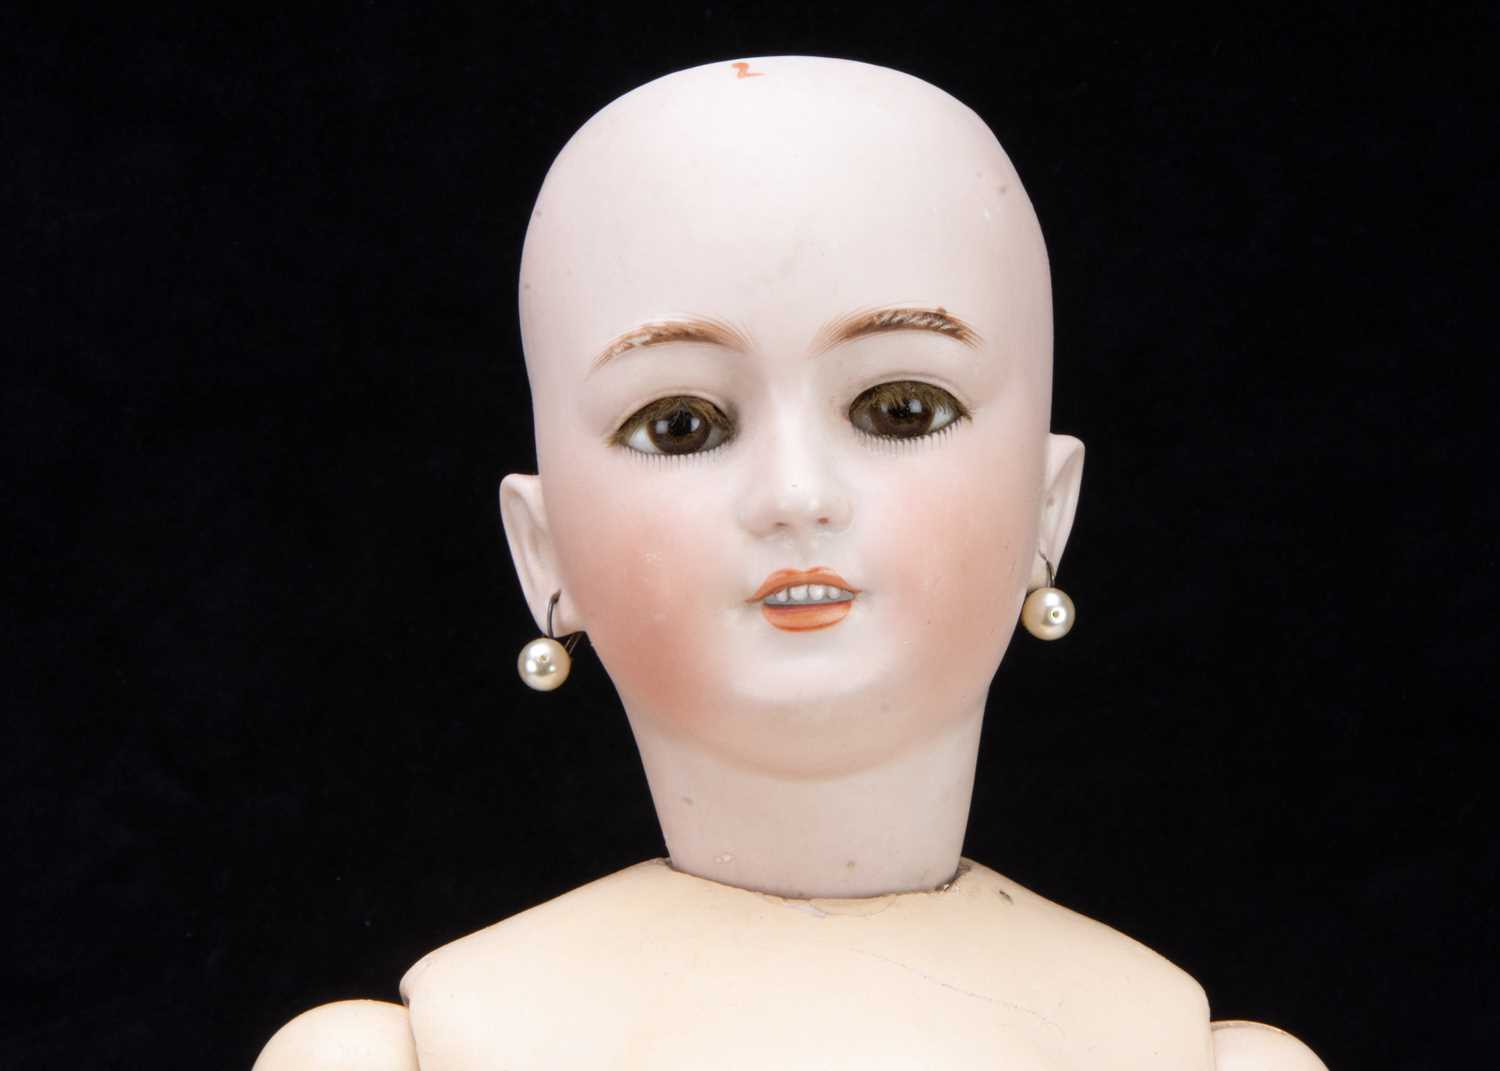 A Simon & Halbig 1159 for Jumeau lady doll, - Image 2 of 2